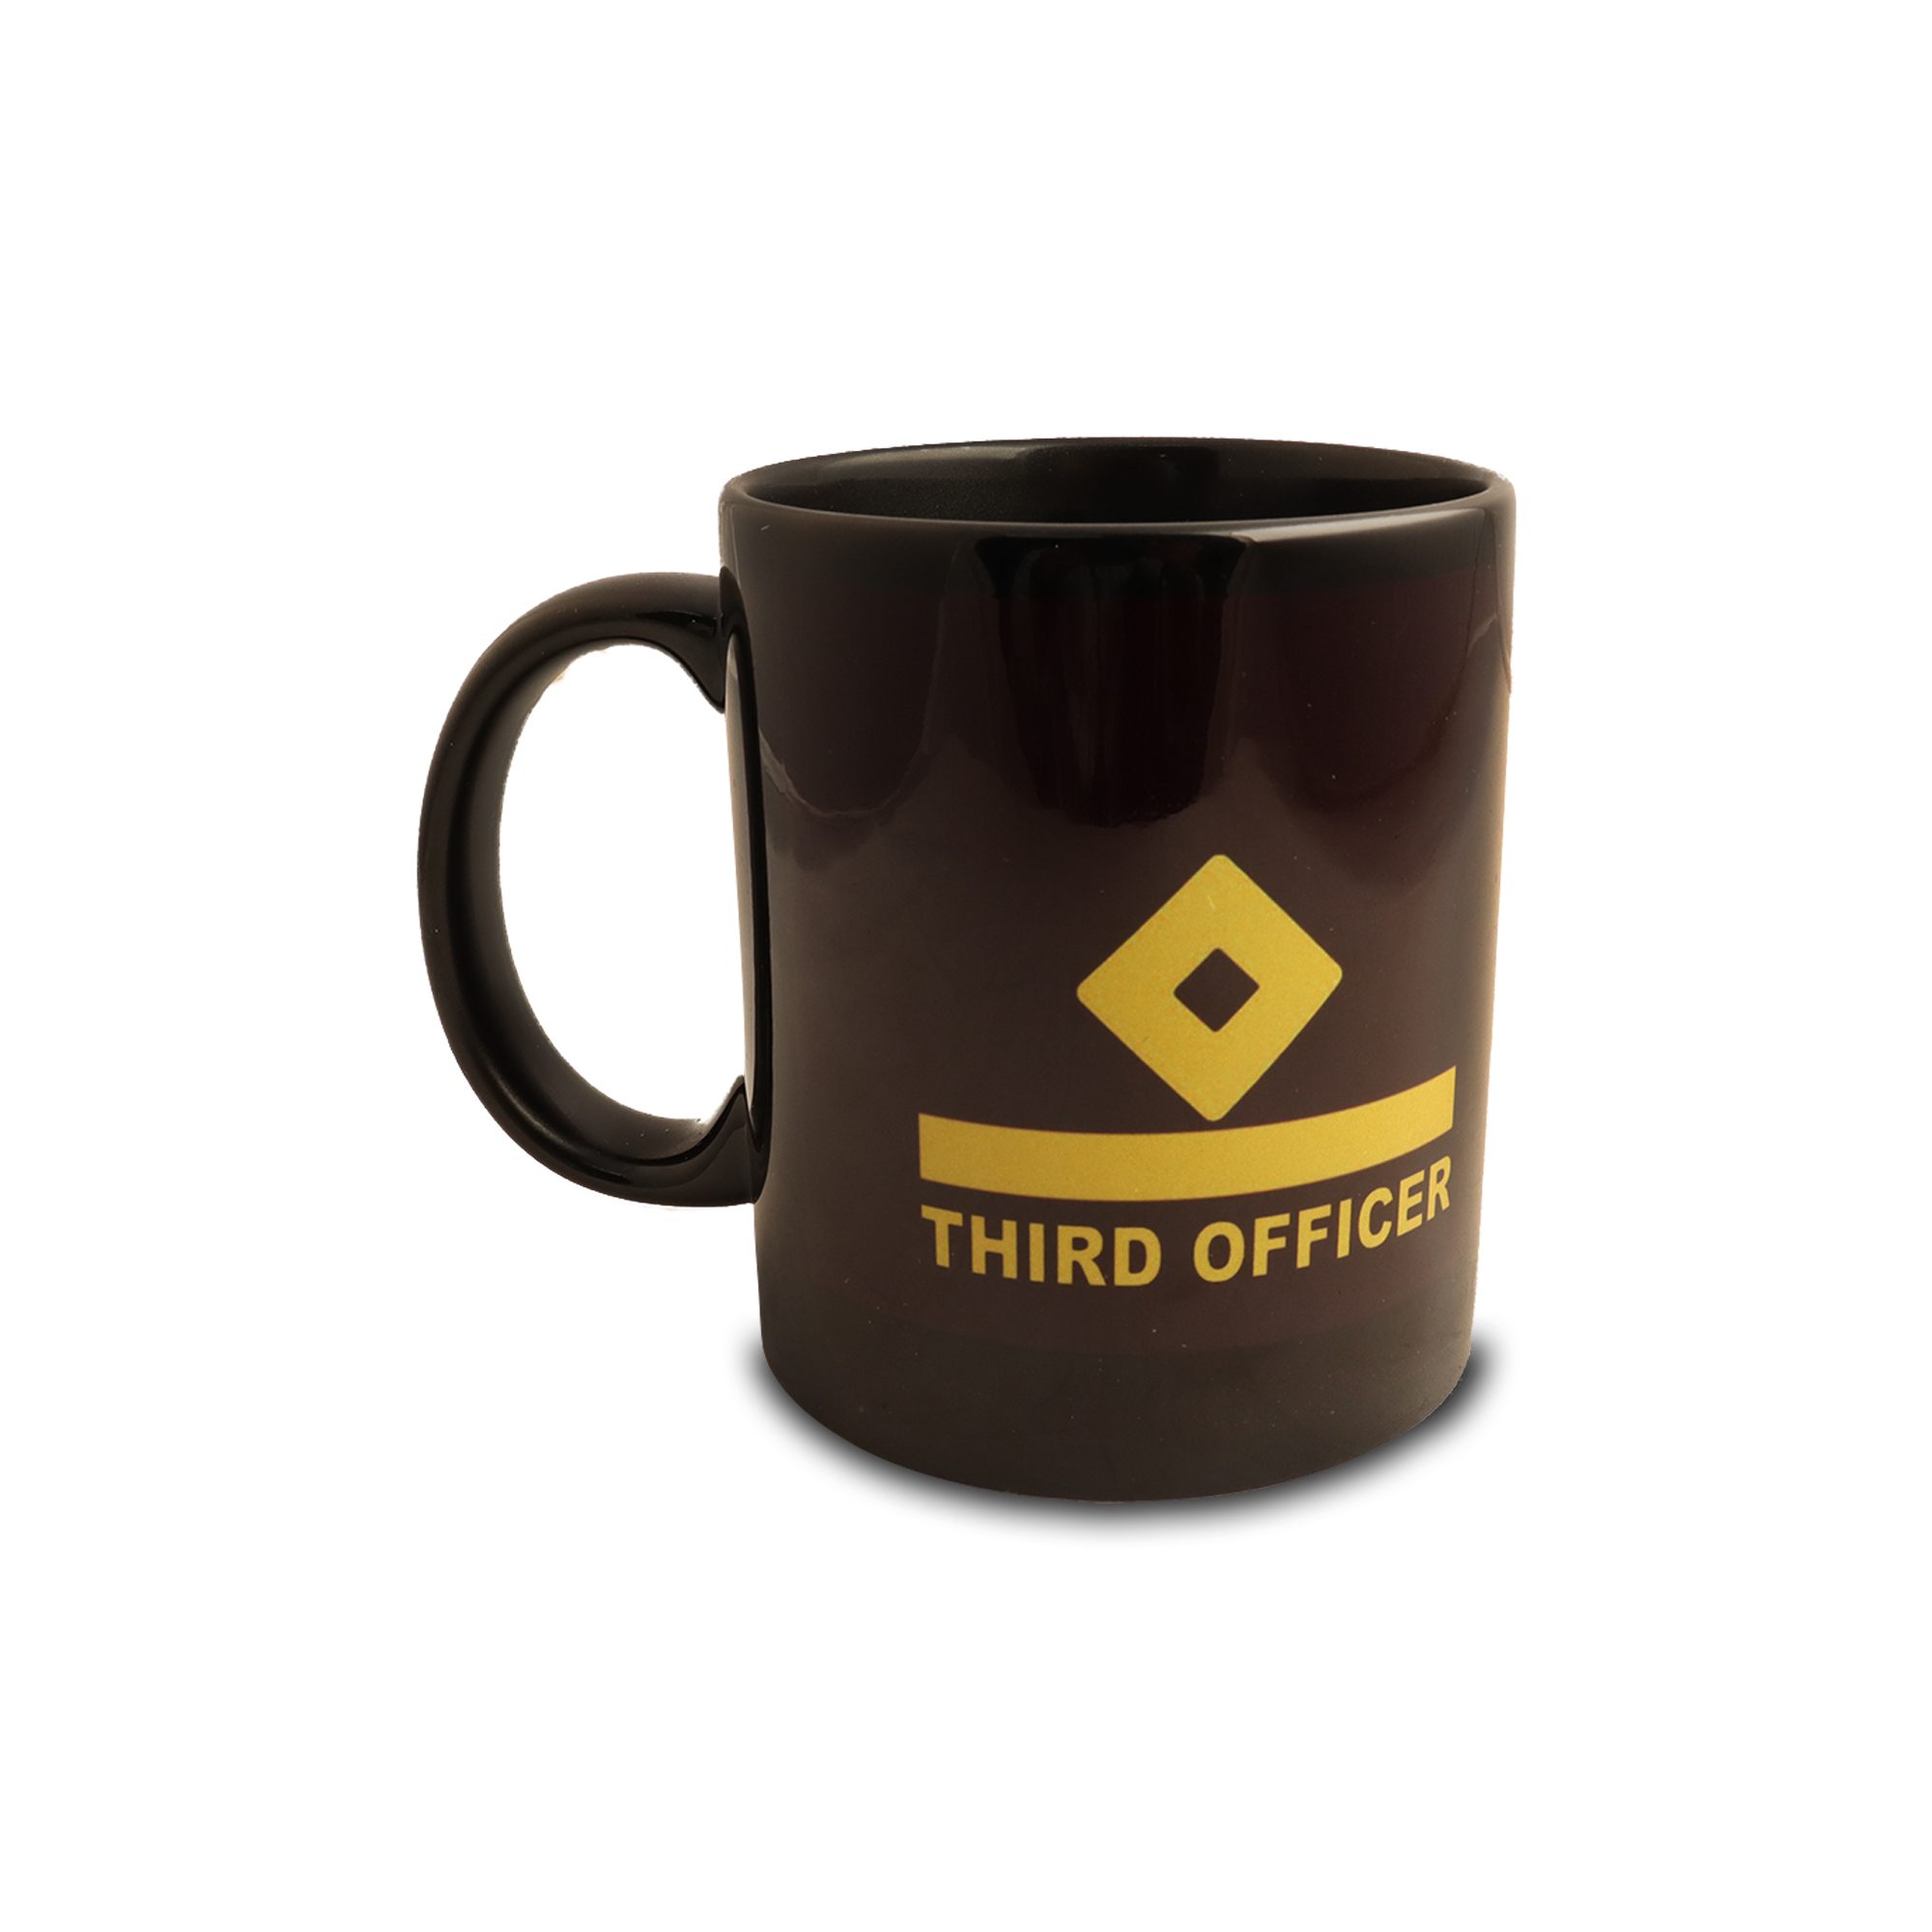 Third Officer Coffee Mug / Cup